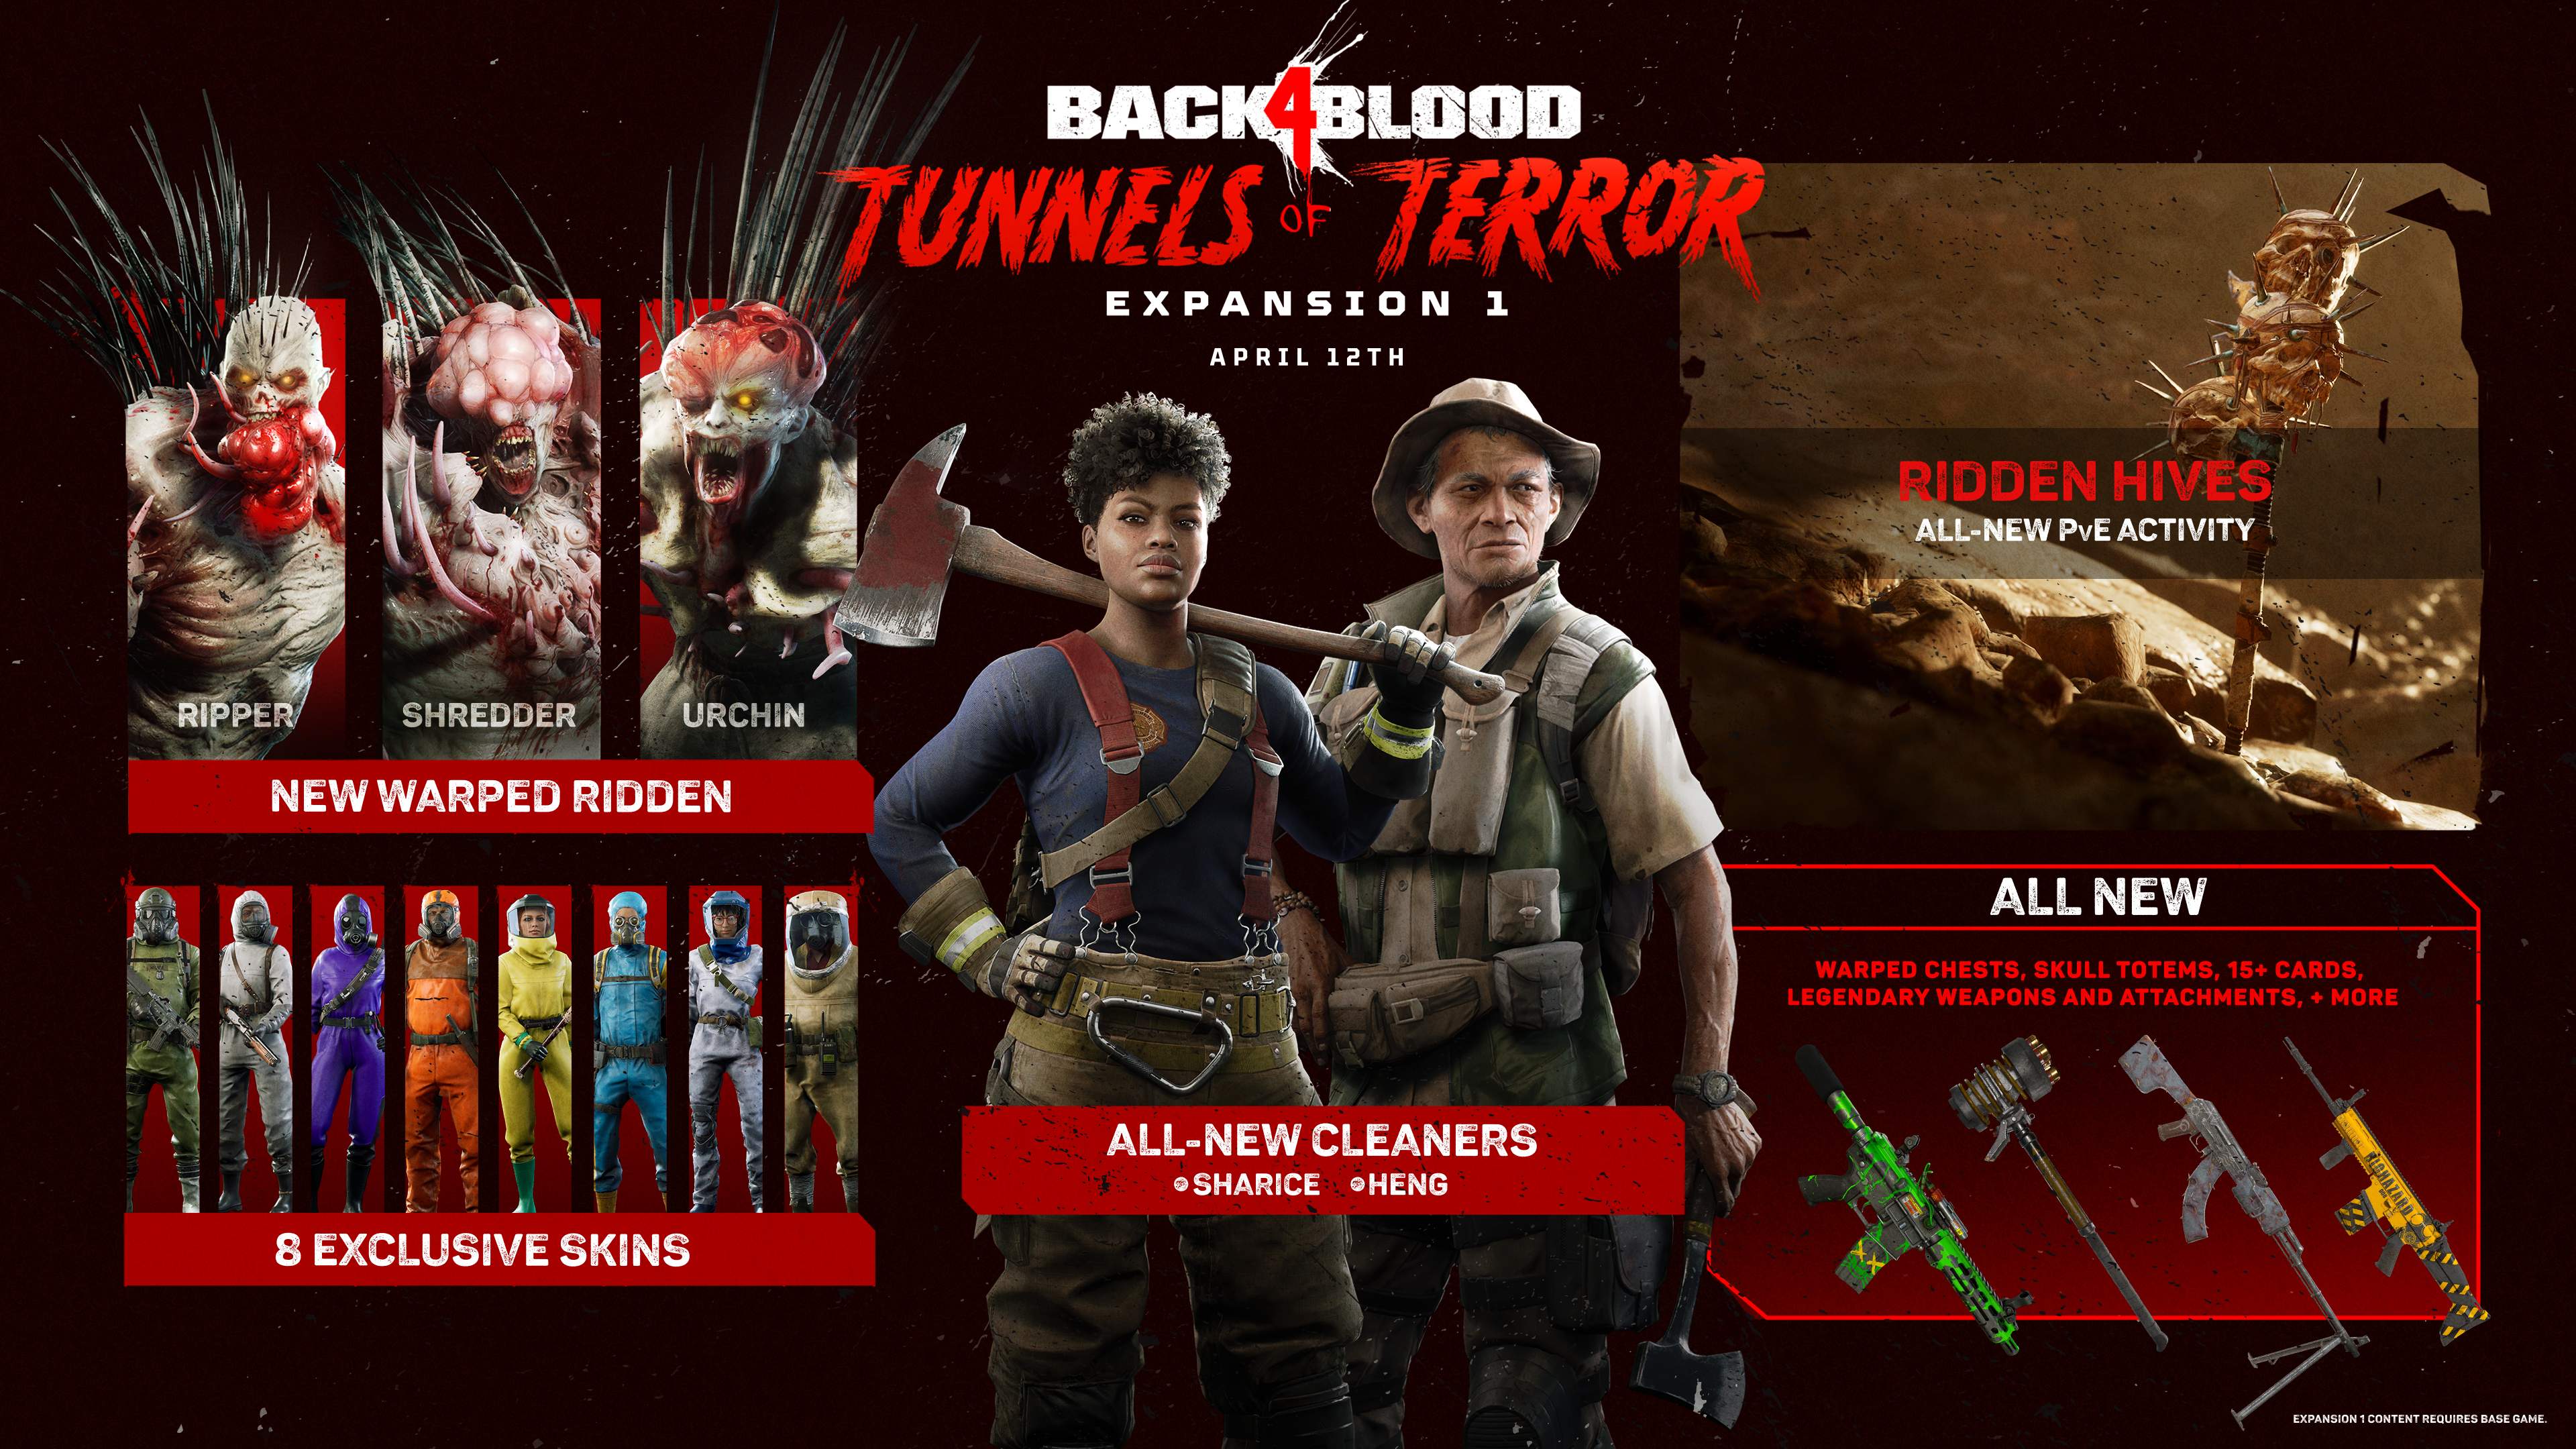 Back 4 Blood: os requisitos mínimos para jogar no PC - Canaltech